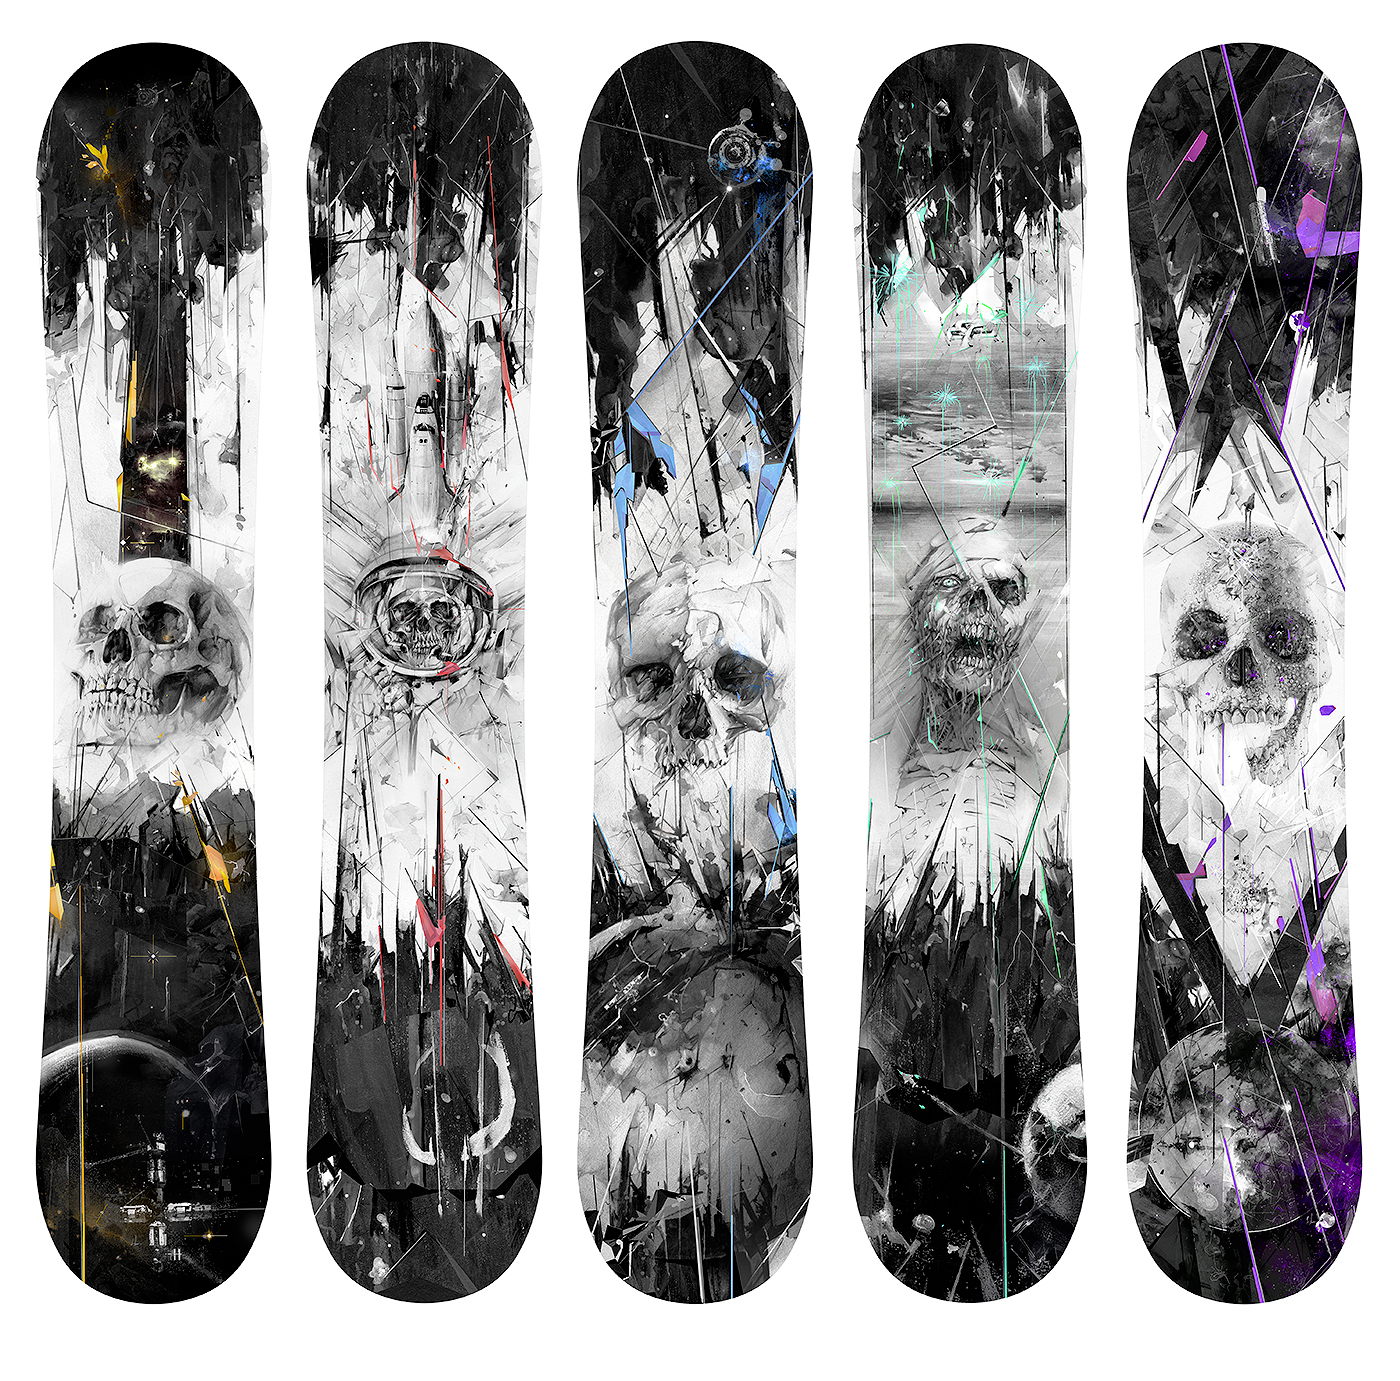 alexis Marcou Endeavor Snowboards skulls Space  graphite Snowboarding sports adobemax visualart graphics experimental